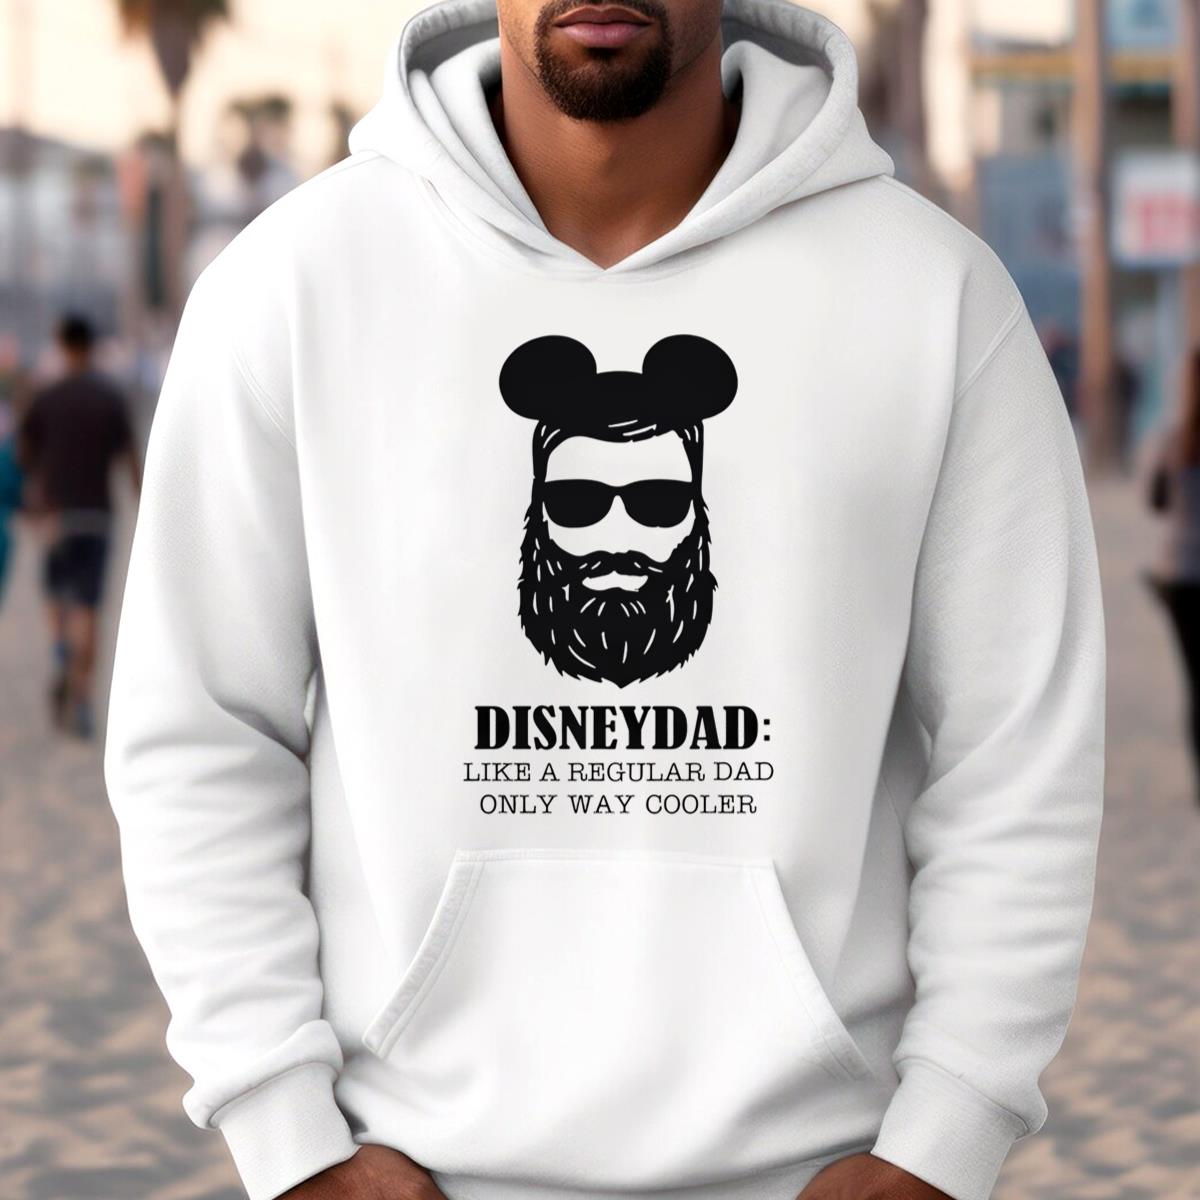 Men's Disney Shirt, Disney Beard Shirt, Disney Dad Shirt, Disney Shirts,  Disney Tshirts, Matching Disney Shirts, Disney Family Shirts -  Canada